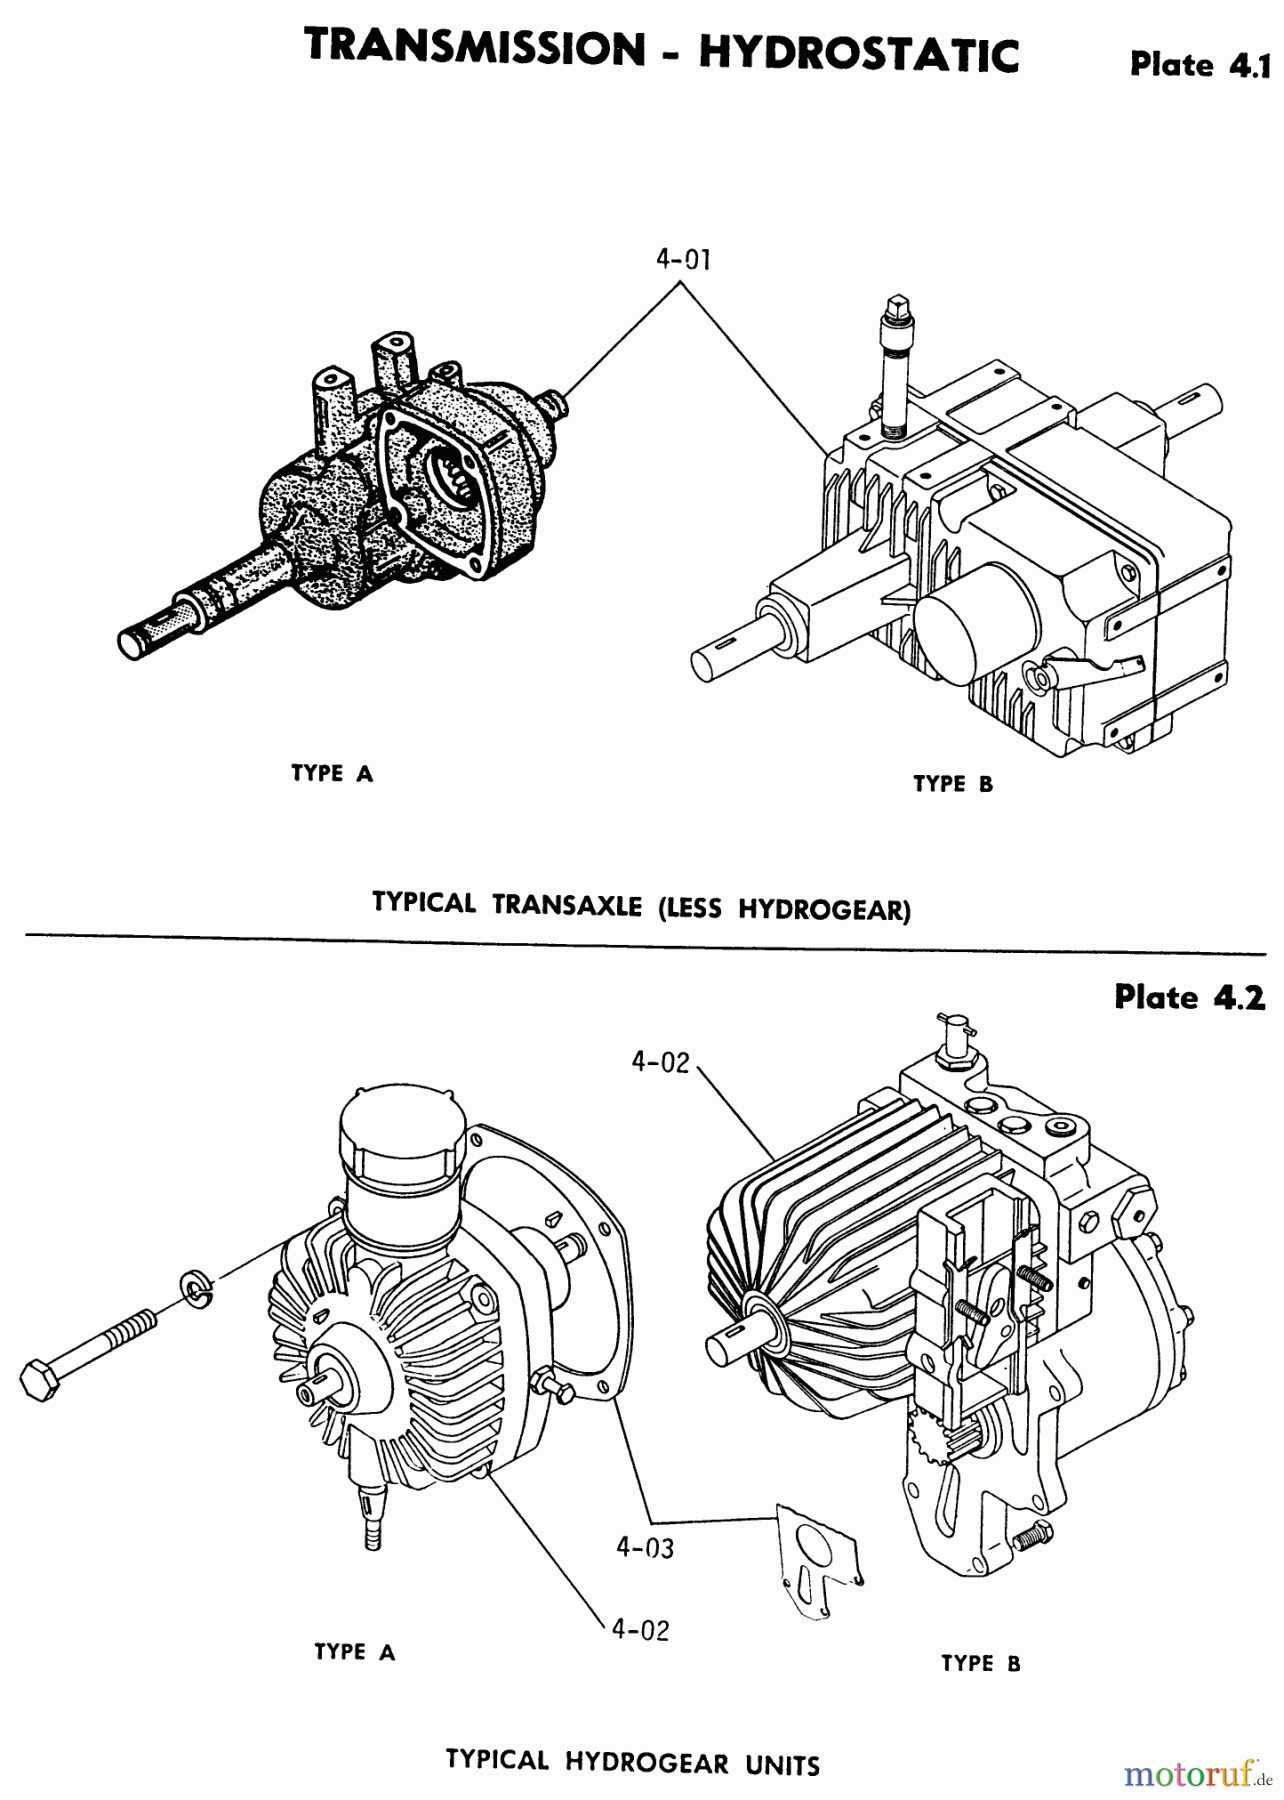  Toro Neu Mowers, Lawn & Garden Tractor Seite 1 1-0100 - Toro WorkHorse 800 Tractor, 1971 4.000 TRANSMISSION-HYDROSTATIC-4.000 COMPLETE ASSY. HYDRO. TRANS. (PLATE 4.1, 4.2)